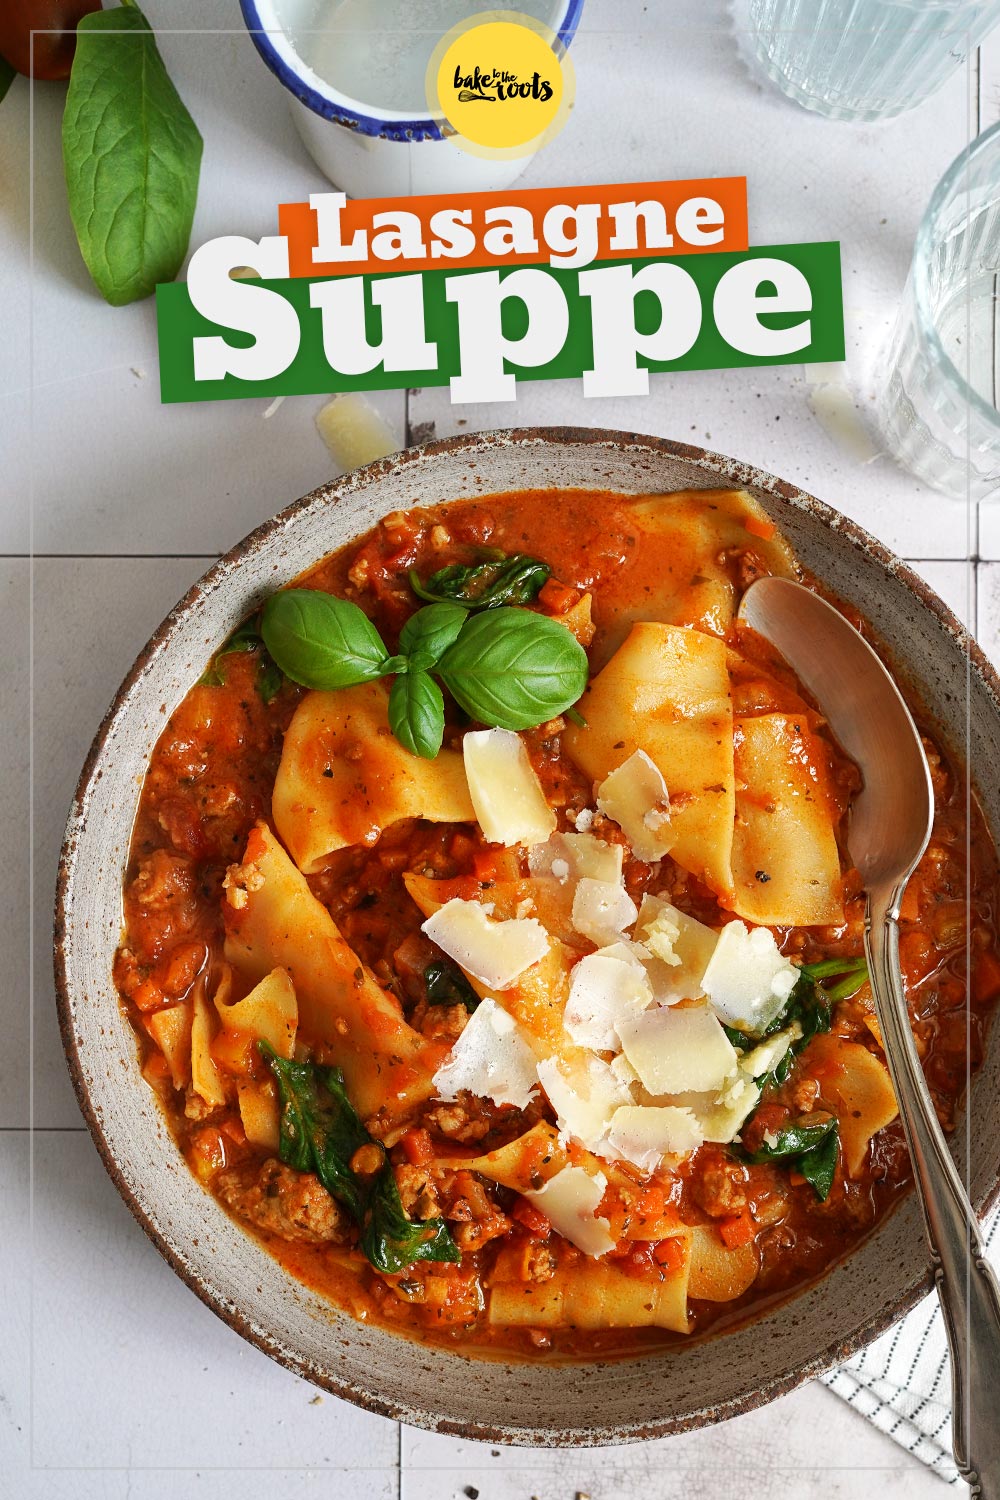 Lasagne Suppe mit Bratwürsten & Spinat | Bake to the roots